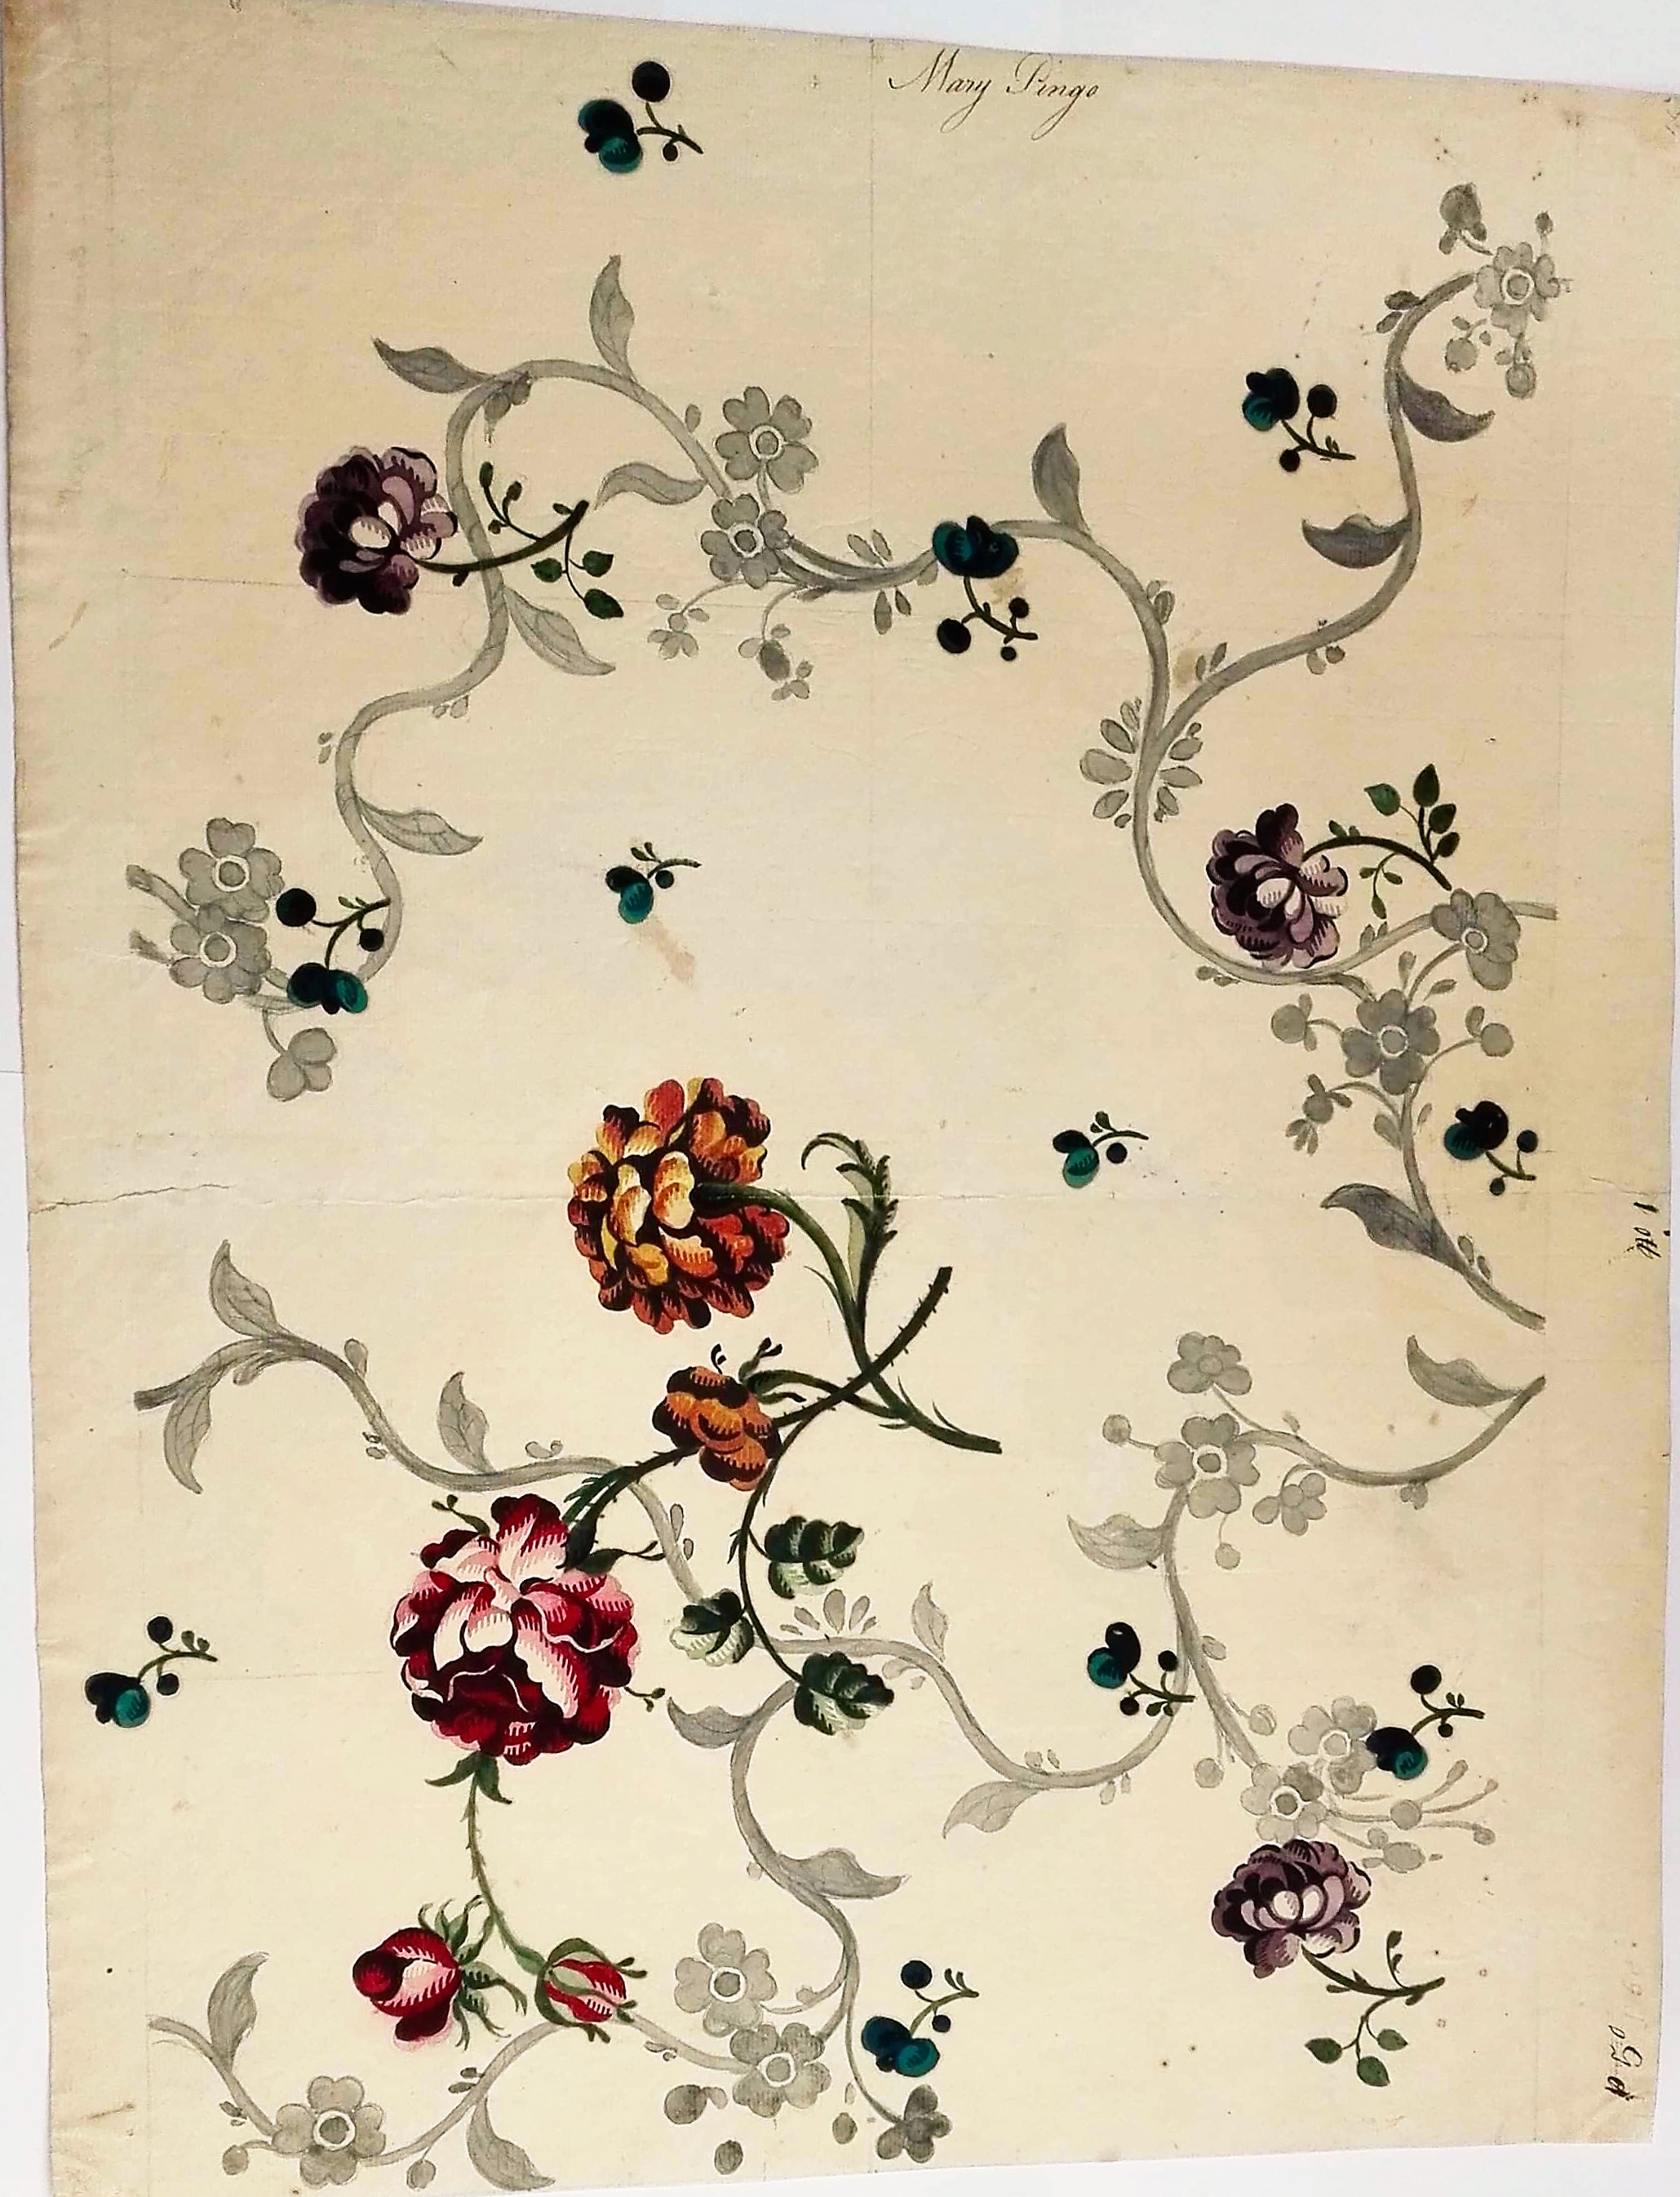 Mary Pingo, Decorative floral design